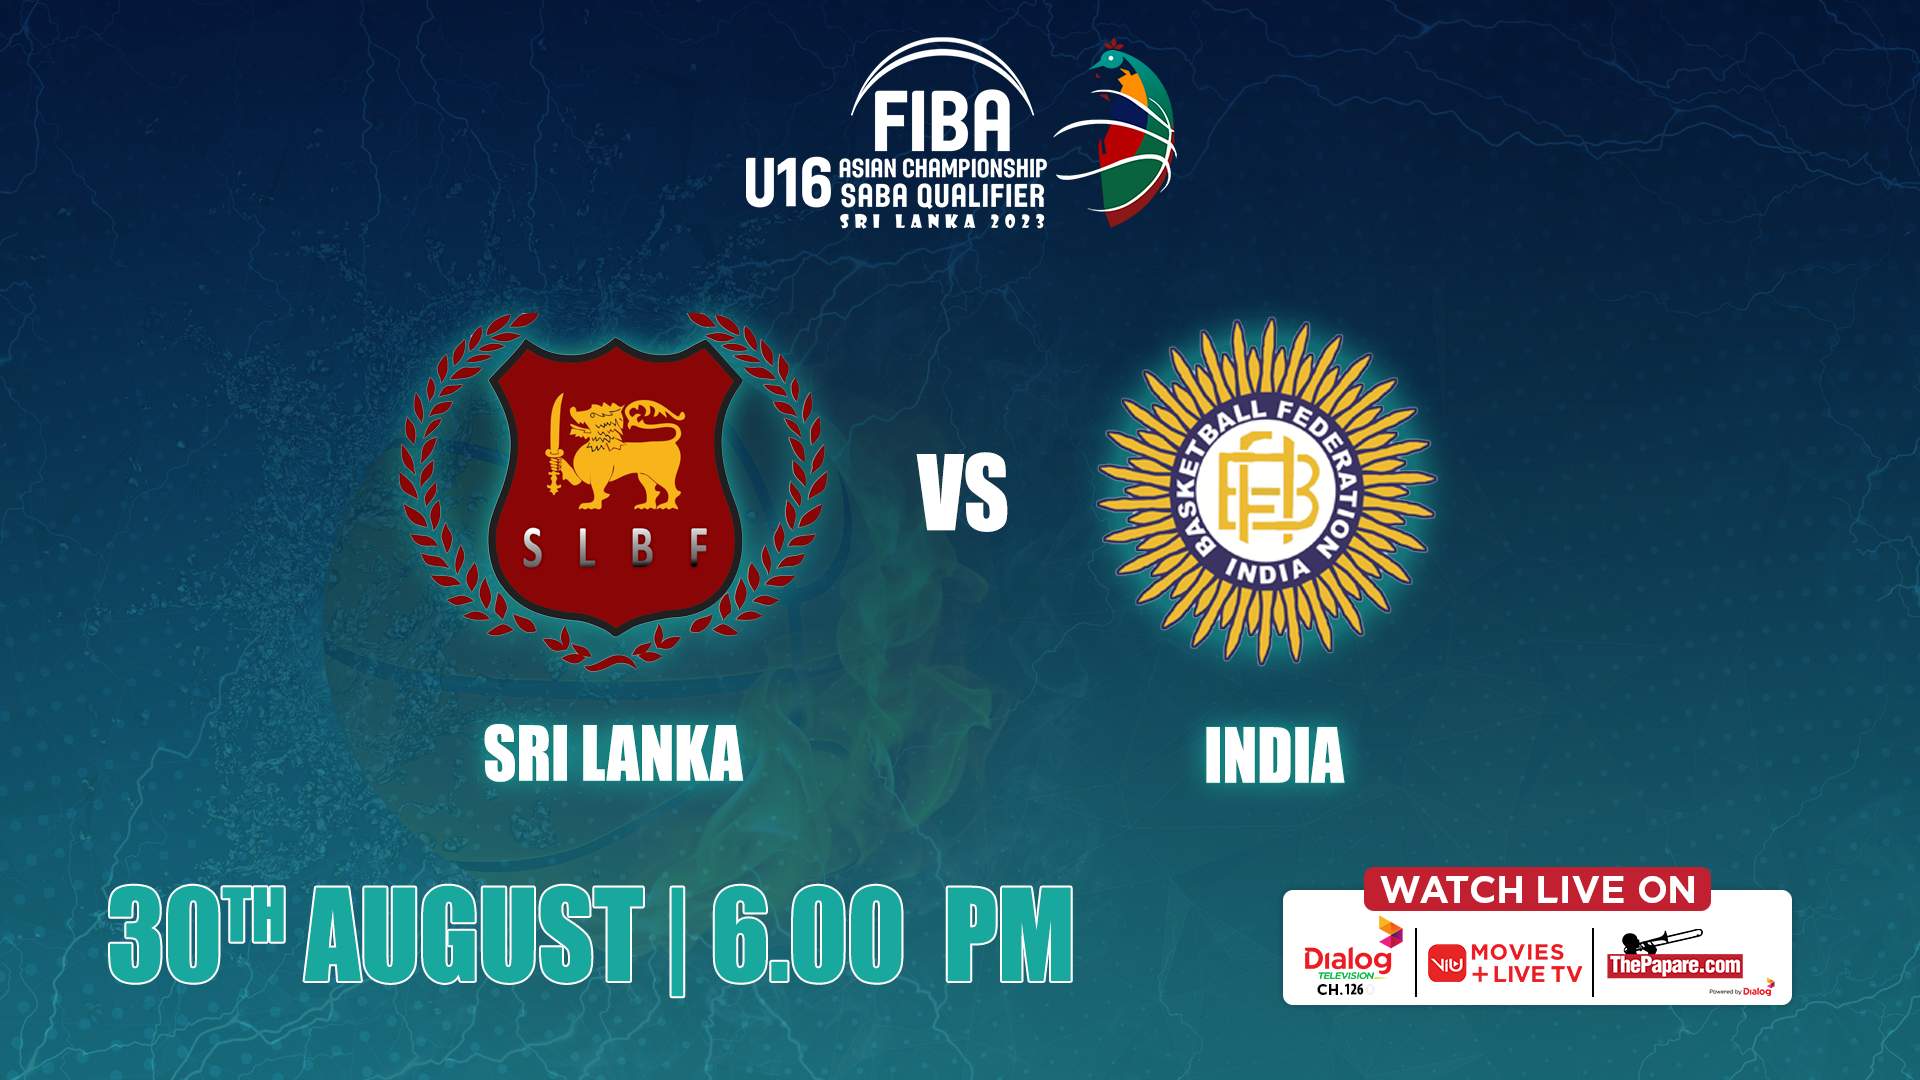 LIVE - Sri Lanka vs India - FIBA U16 Asian Championship